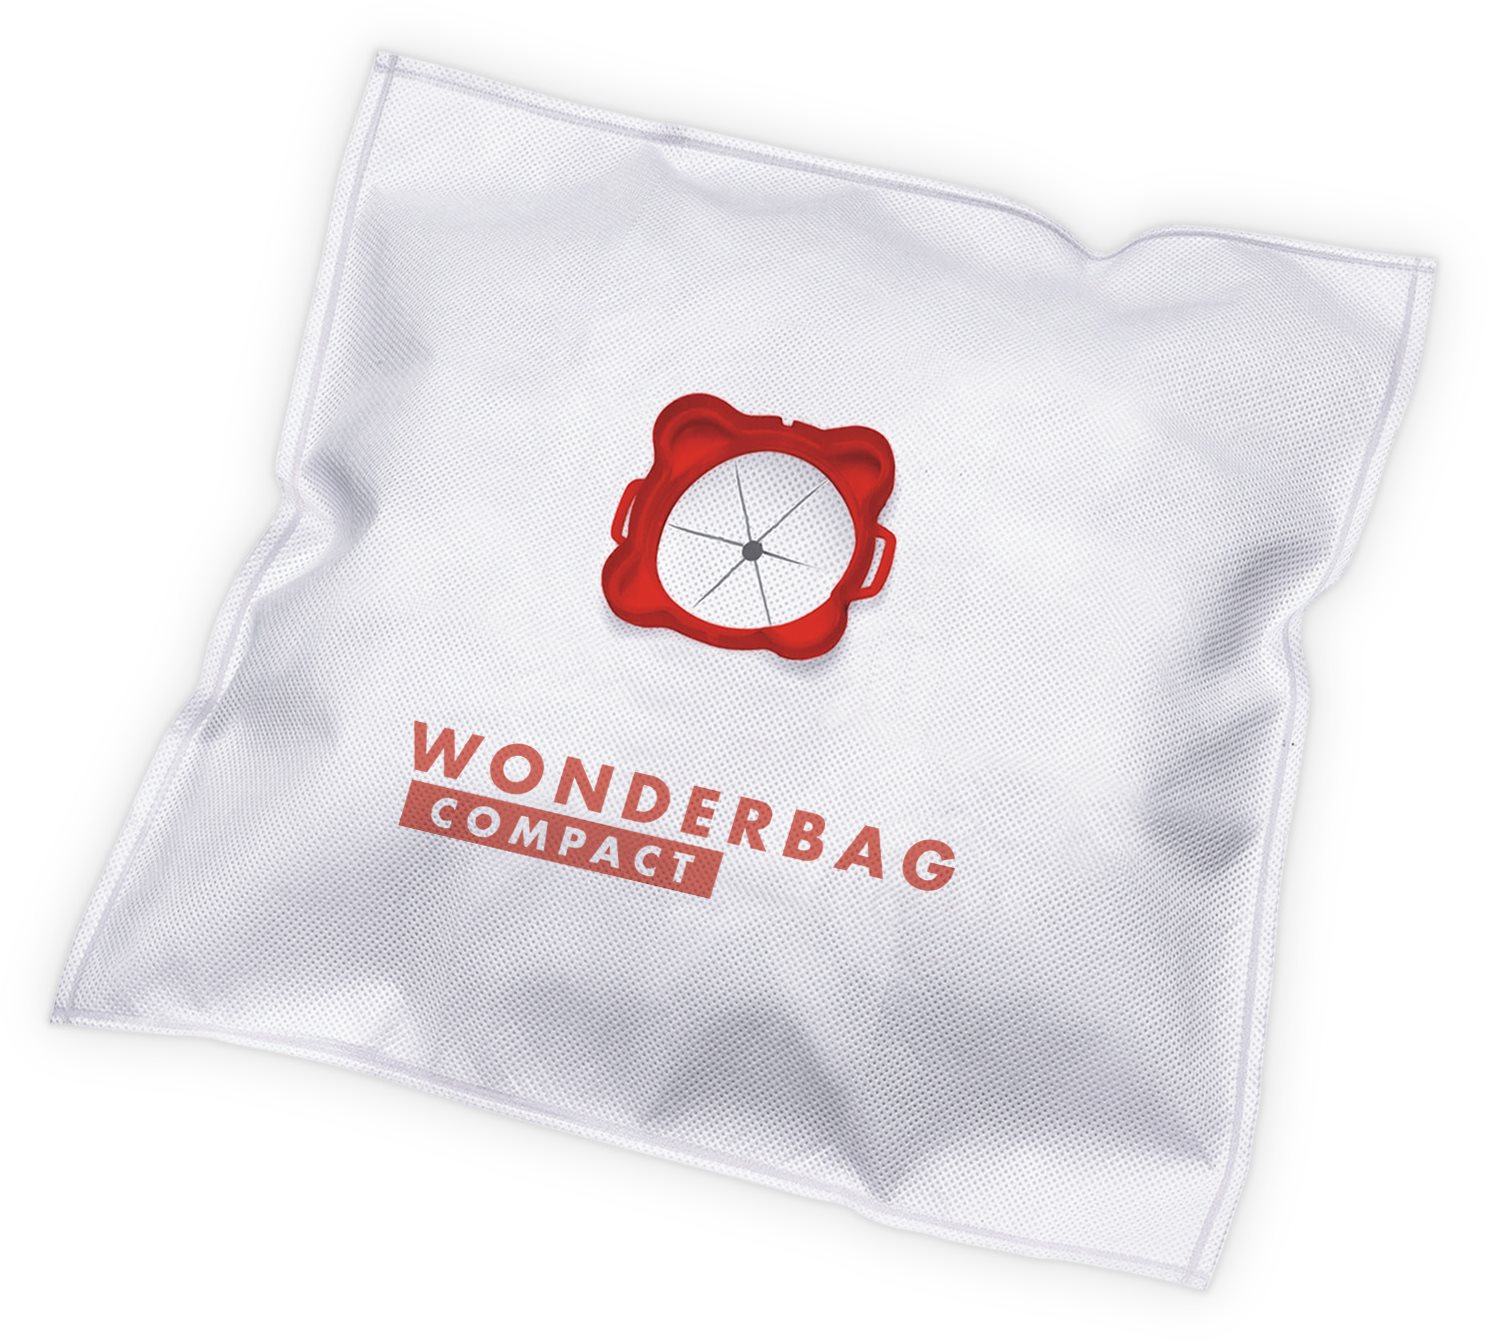 Porzsák Rowenta WB305140 Wonderbag Compact